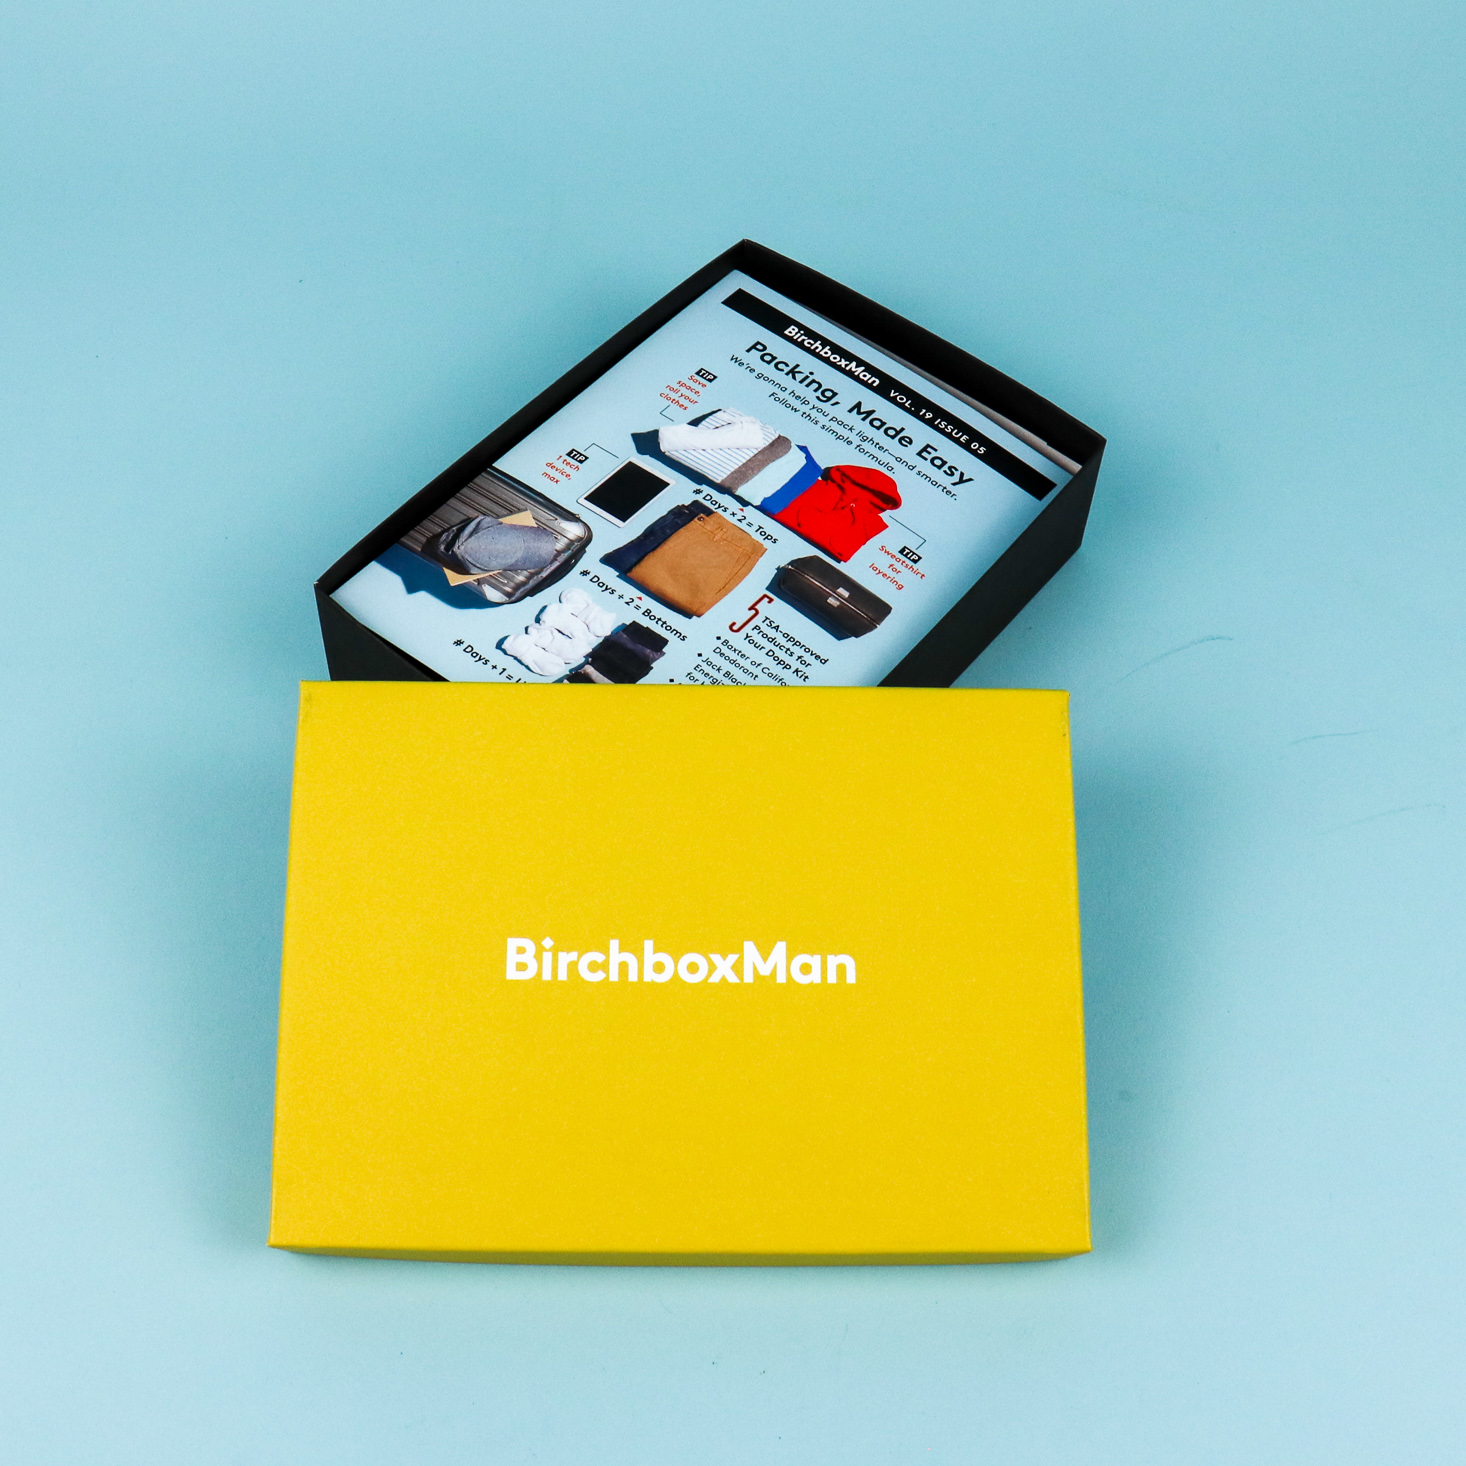 Birchbox Grooming Men’s Sample Box Review + Coupon – May 2019